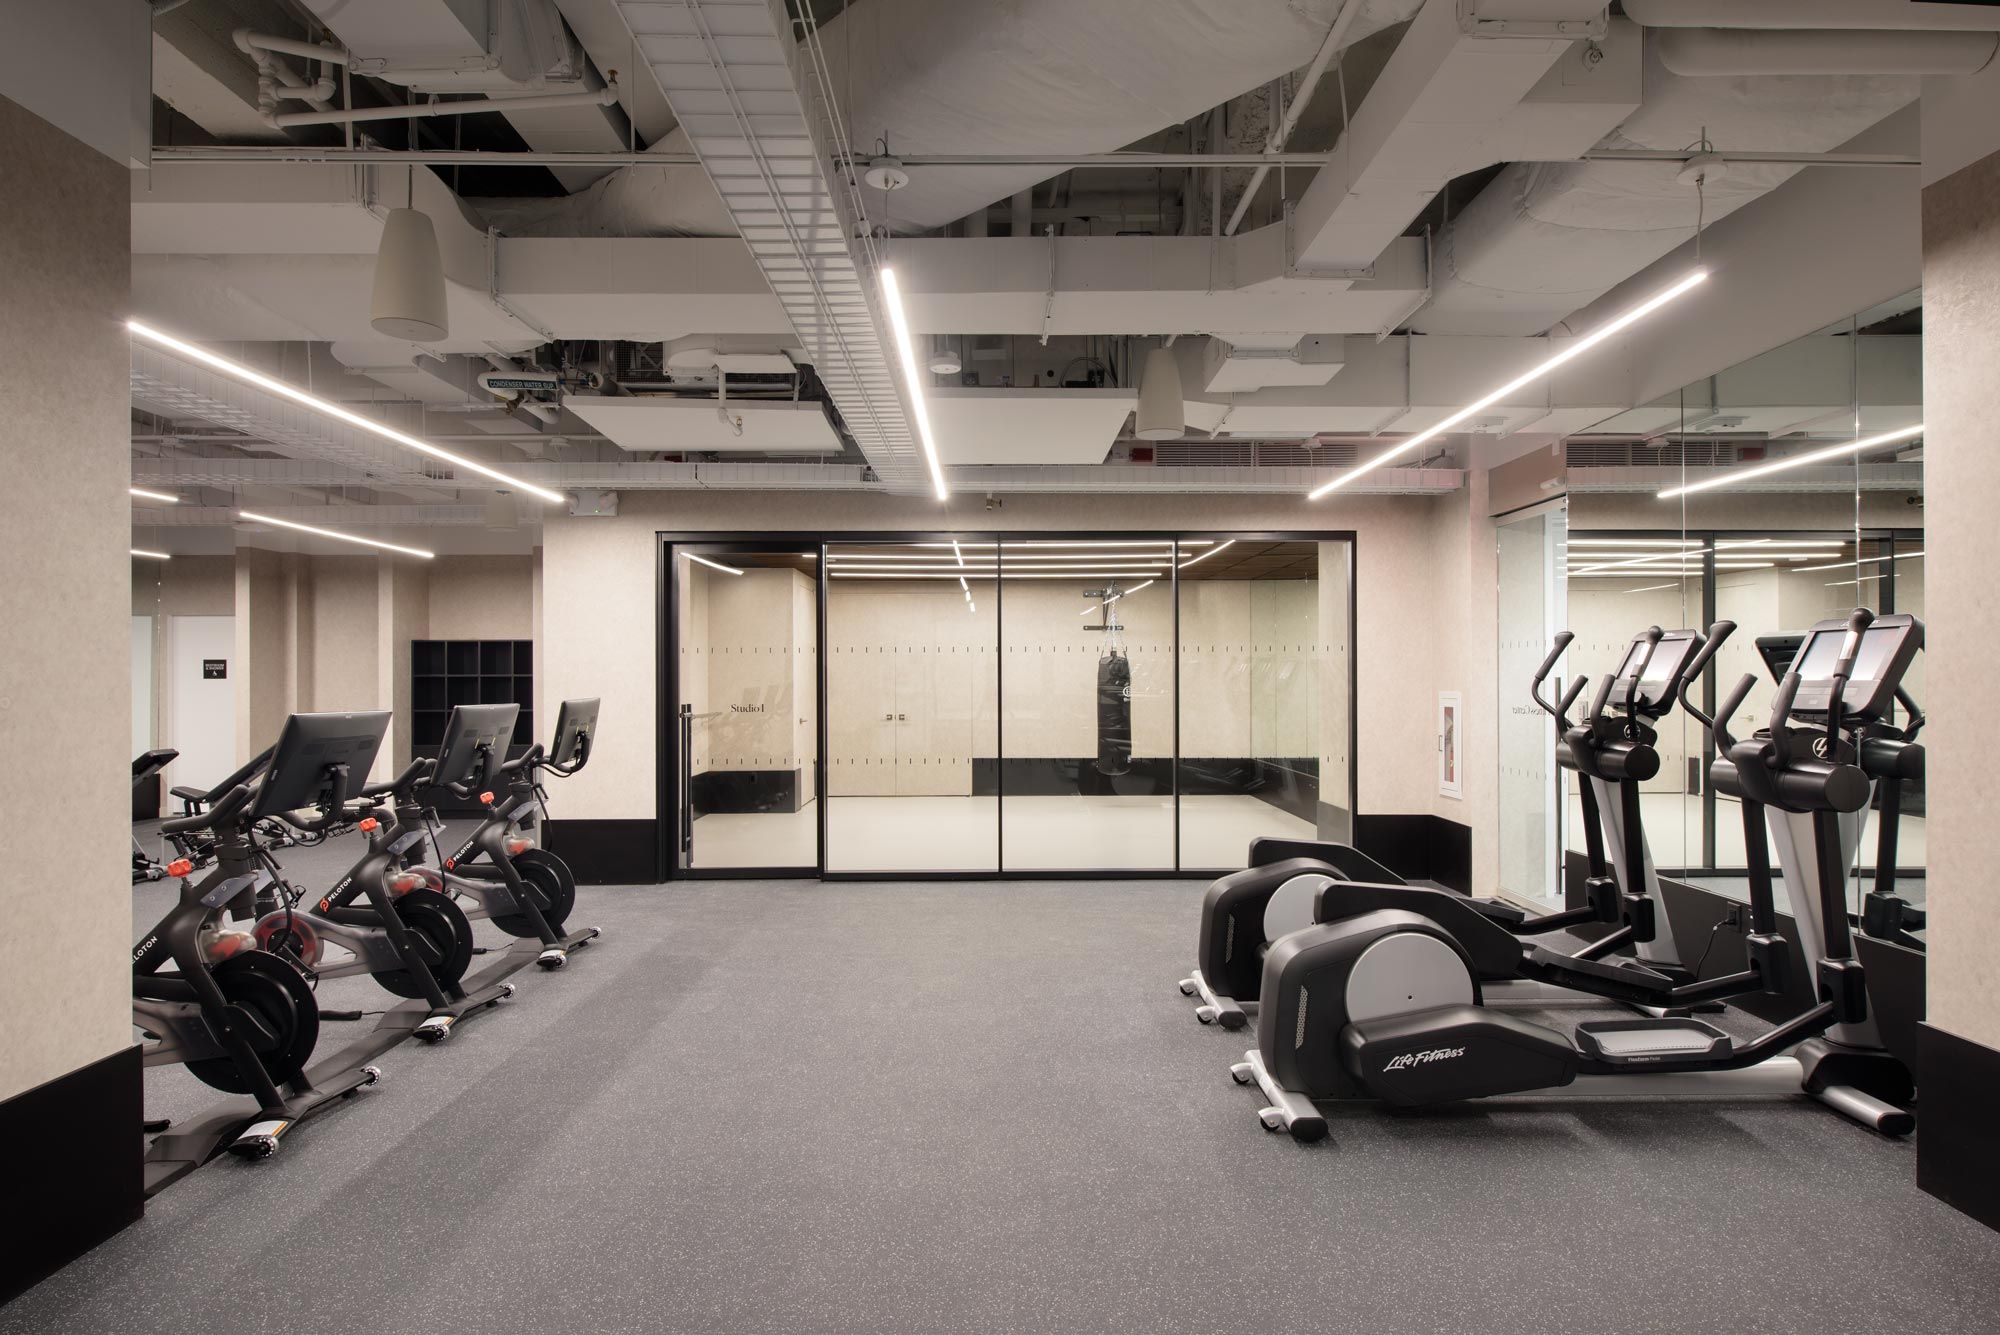 410 Park Avenue fitness center equipment 2